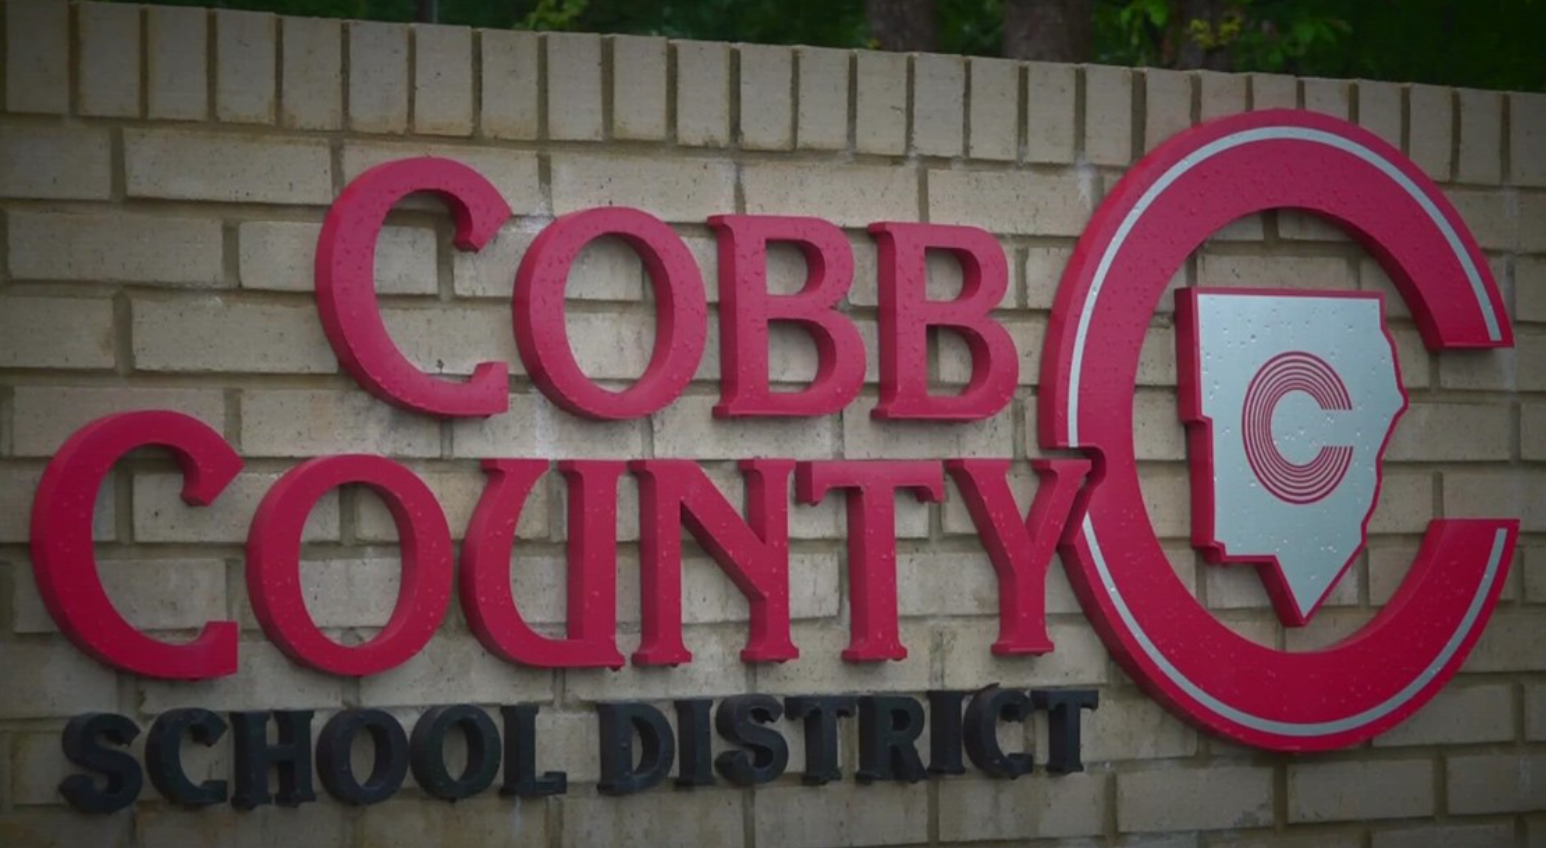 Cobb County School Calendar